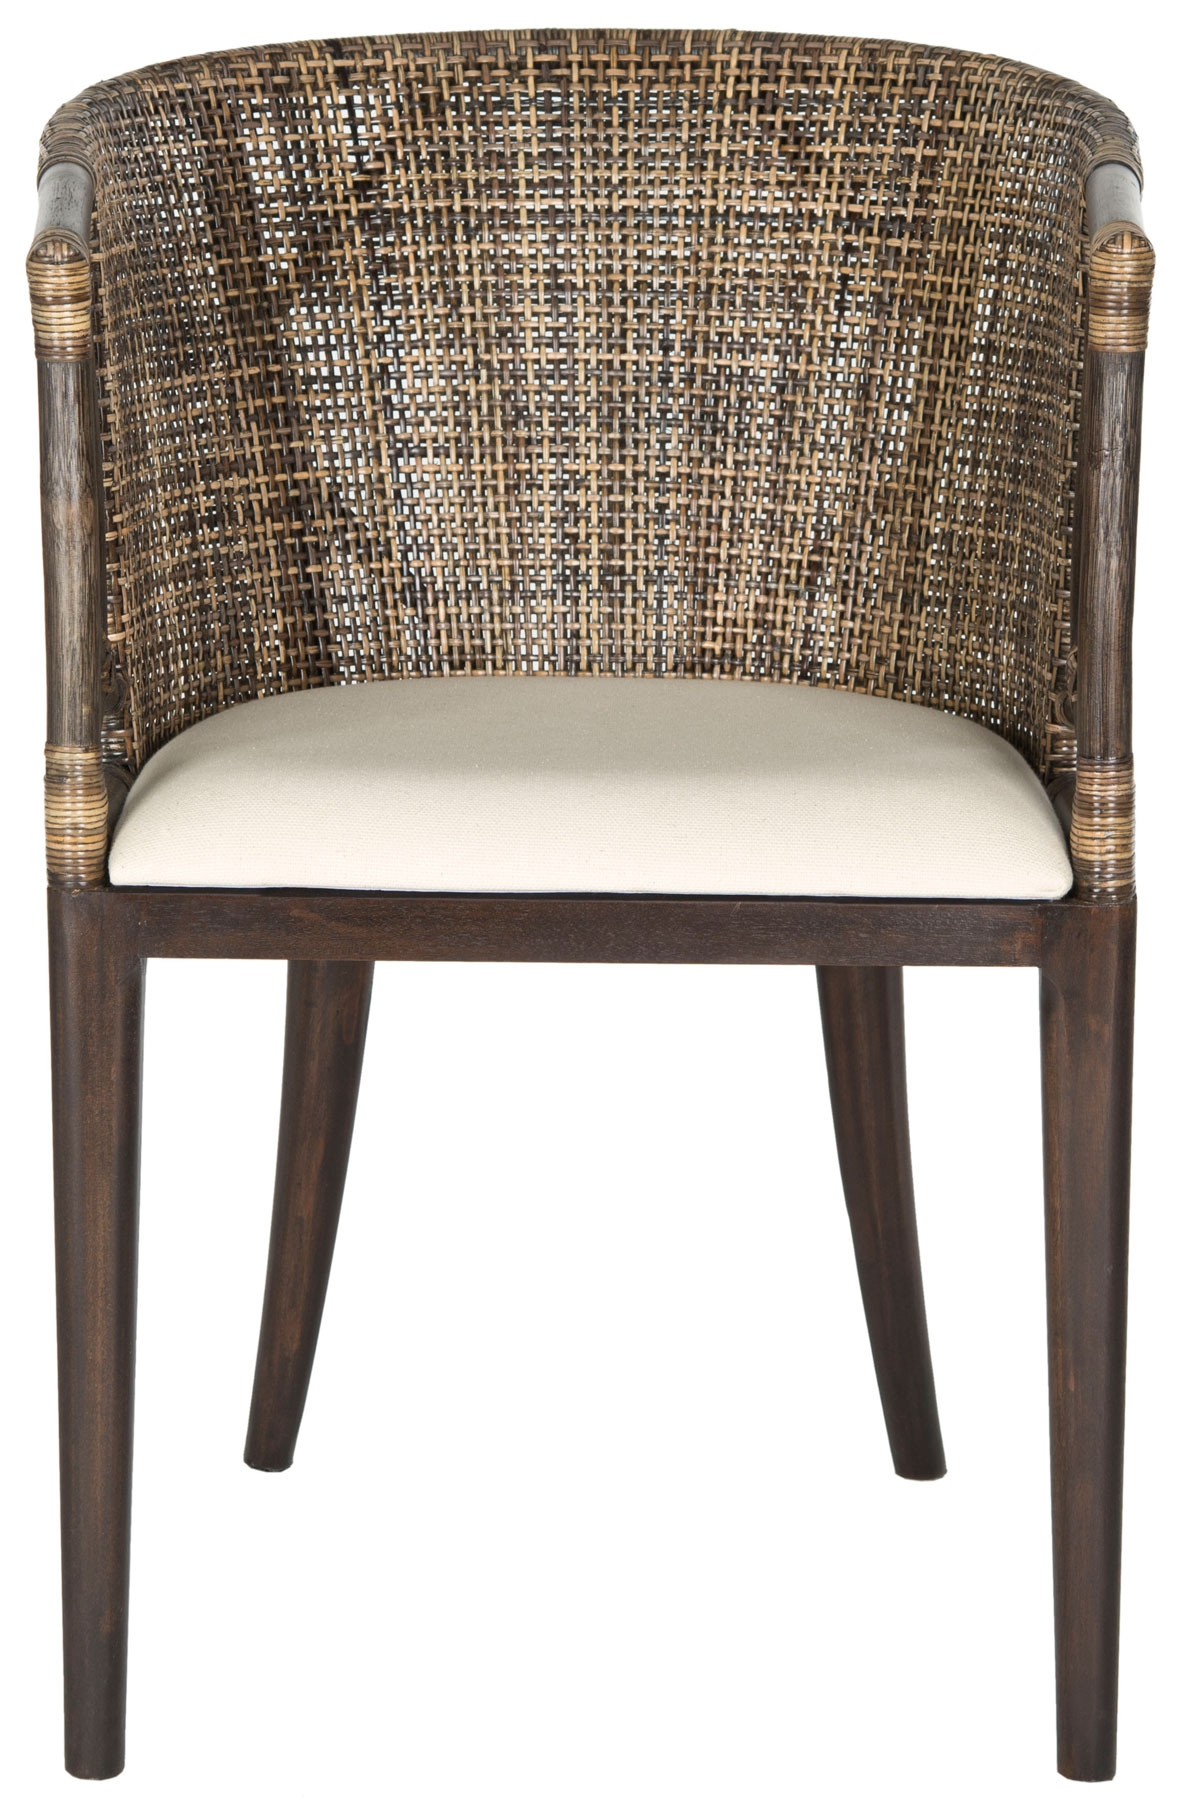 Beningo Arm Chair - Brown/Black - Arlo Home - Image 2